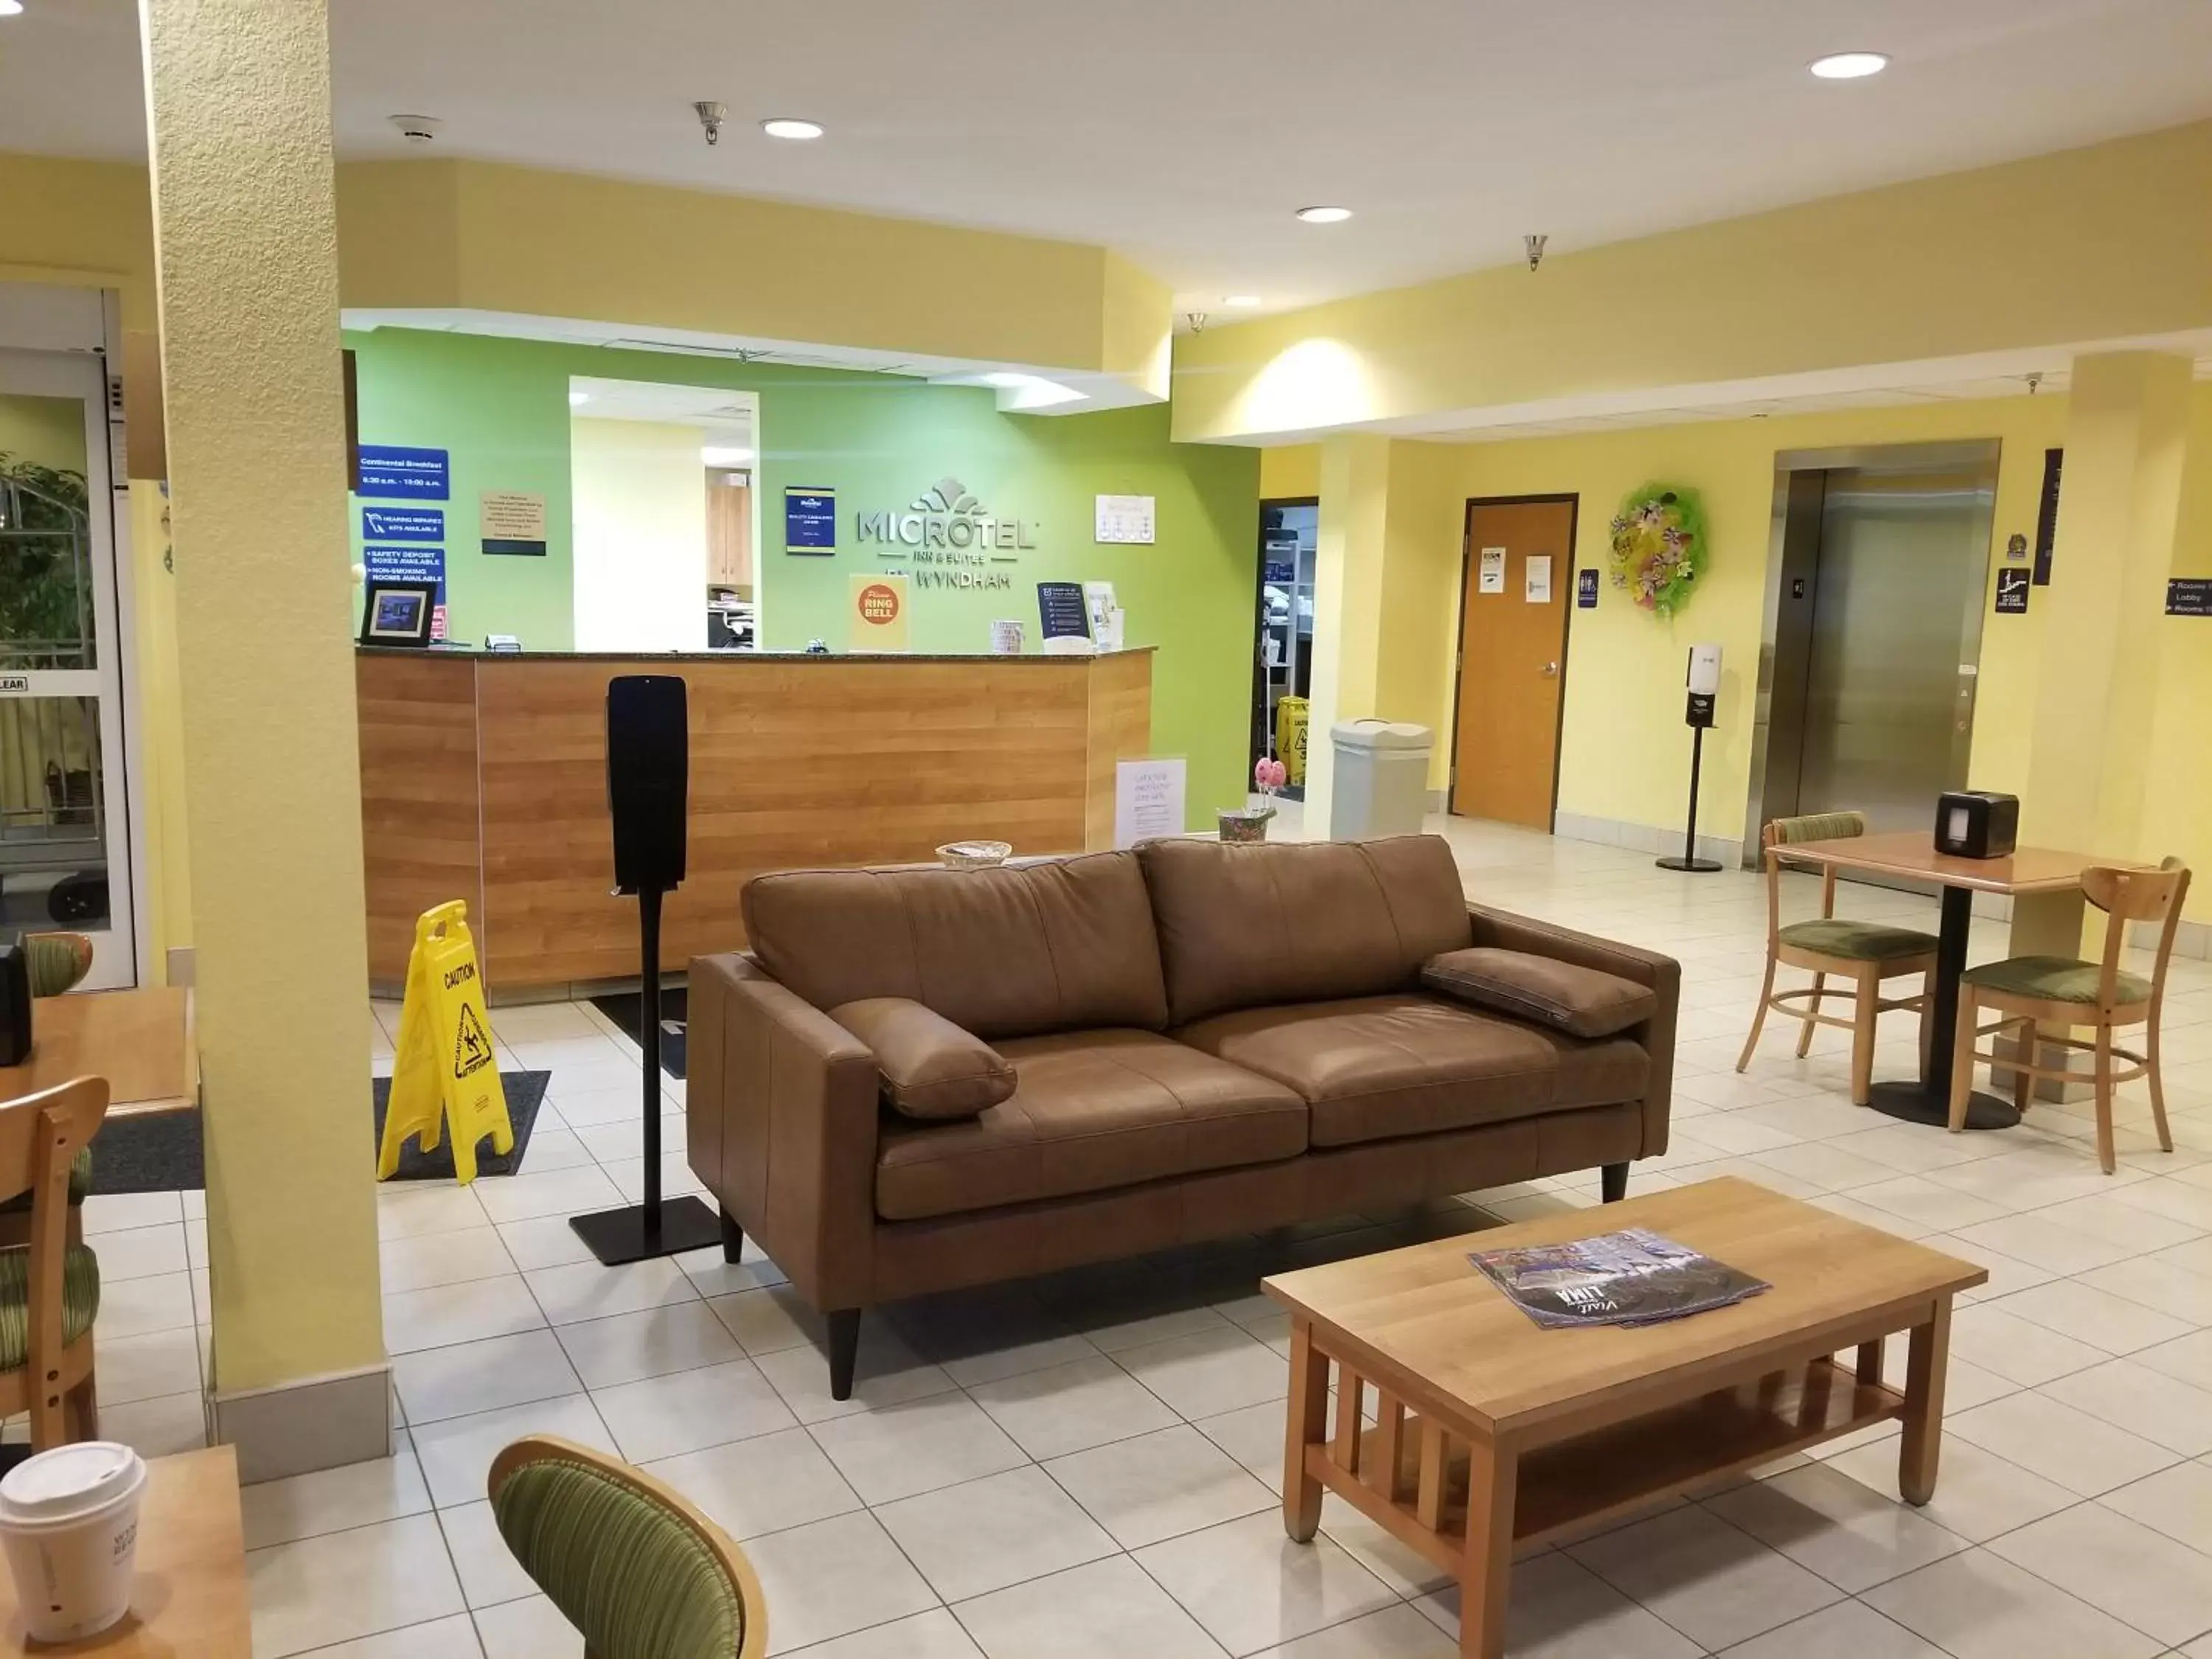 Lobby or reception in Microtel Inn & Suites by Wyndham Delphos